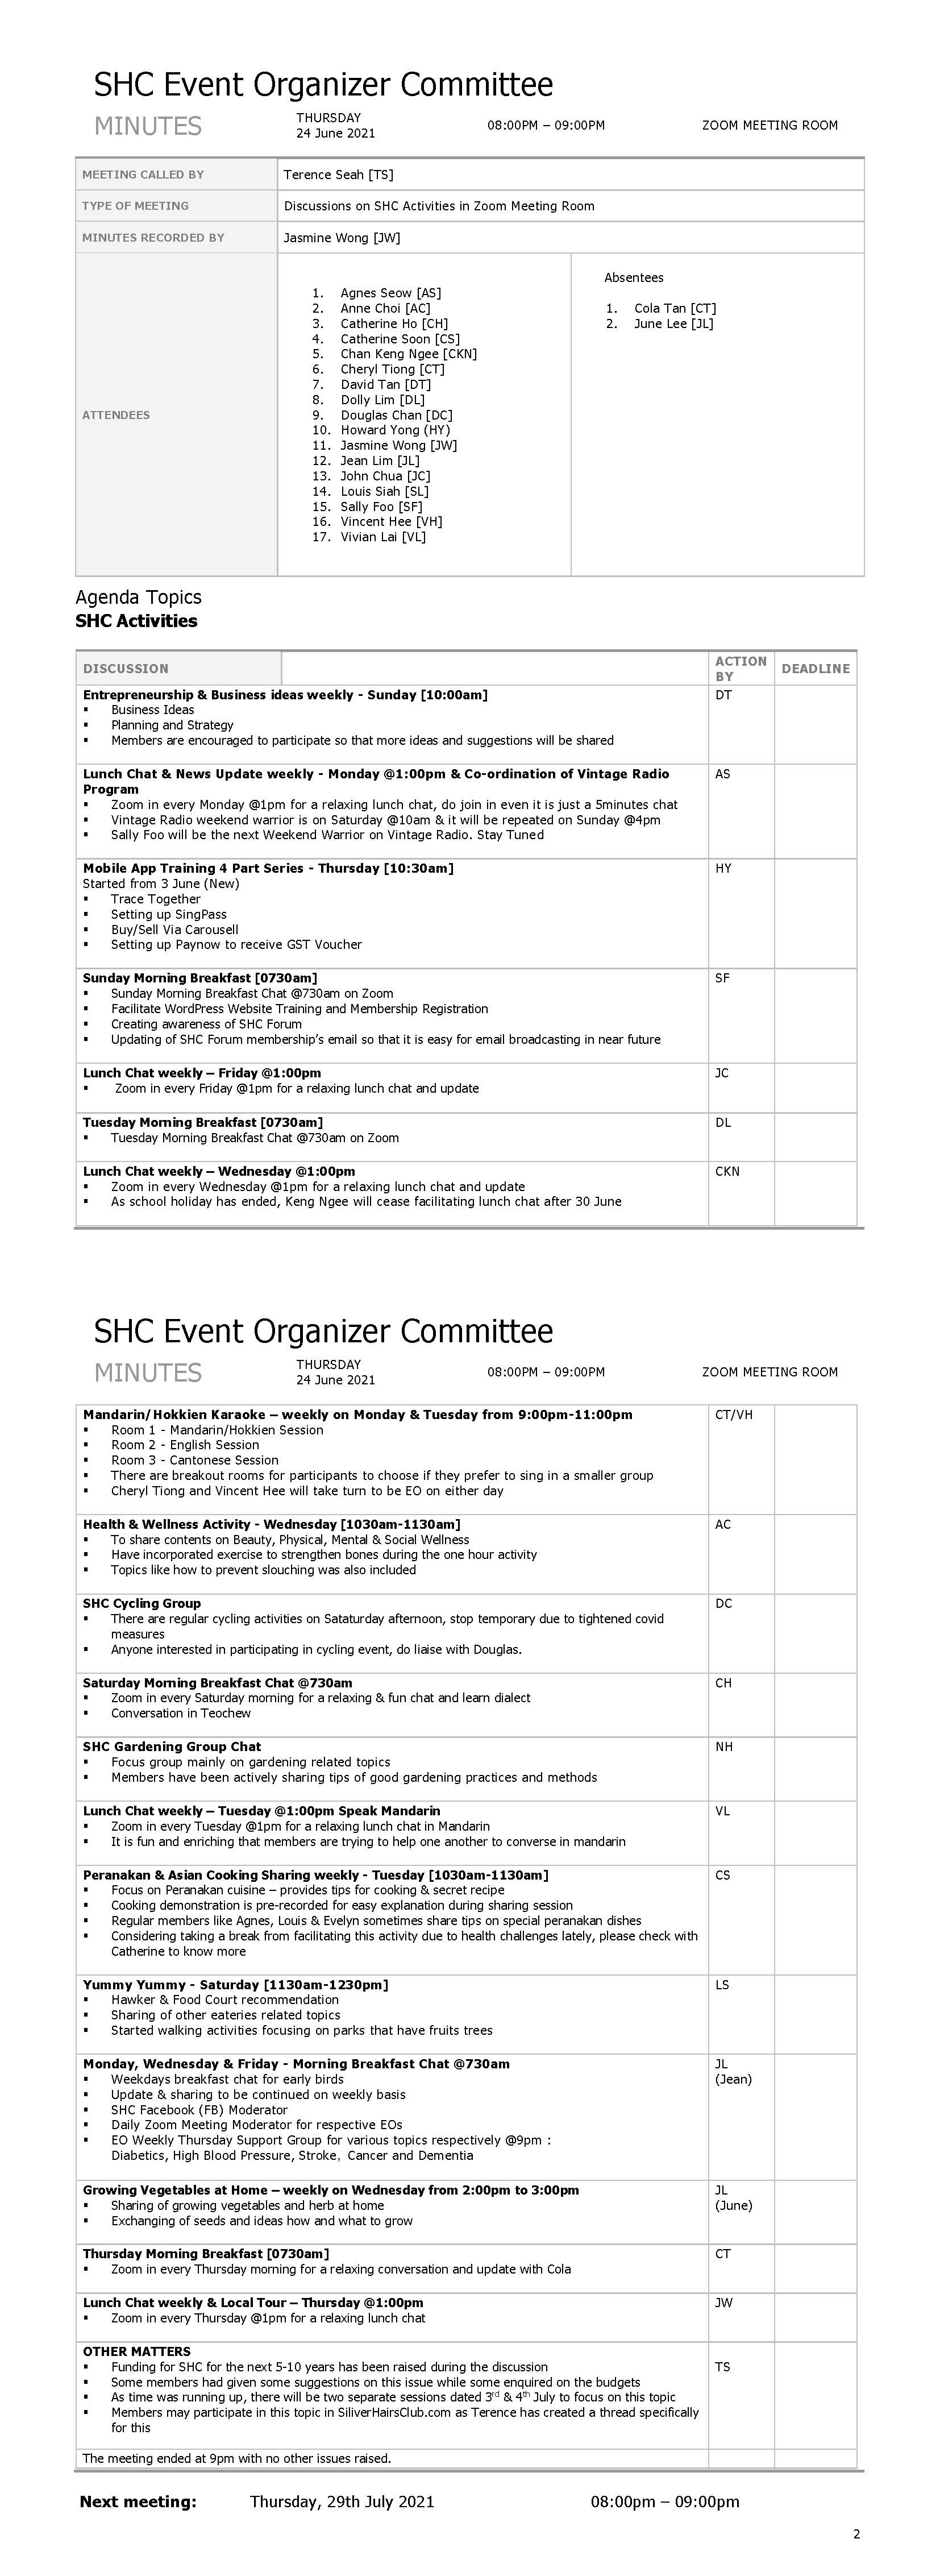 SHC Minutes of Meeting (June 2021)